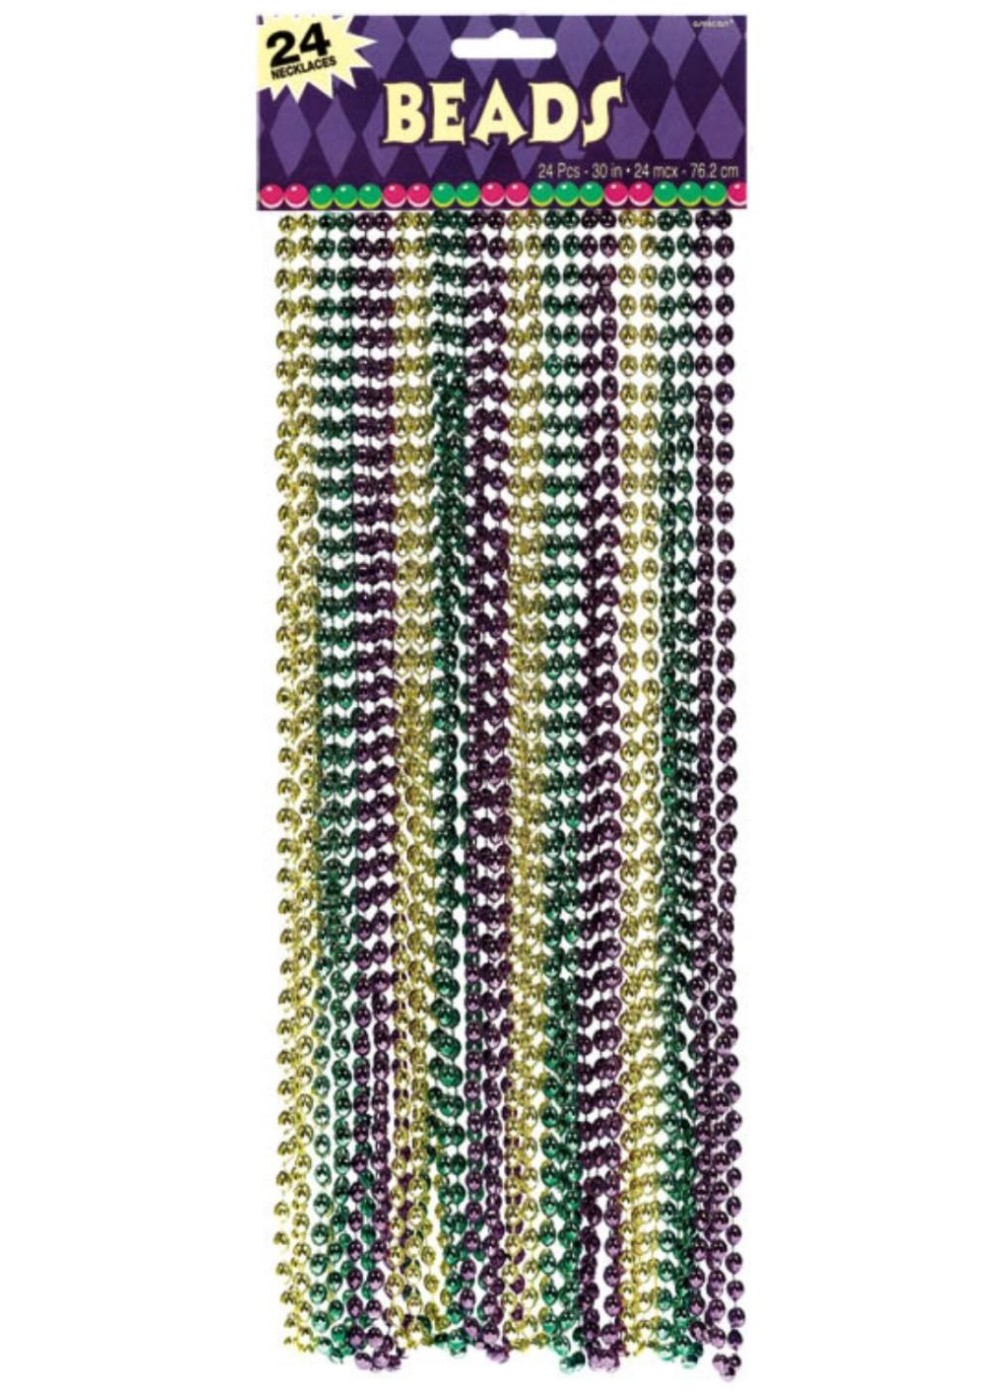 Mardi Gras Beads Pack Of 24